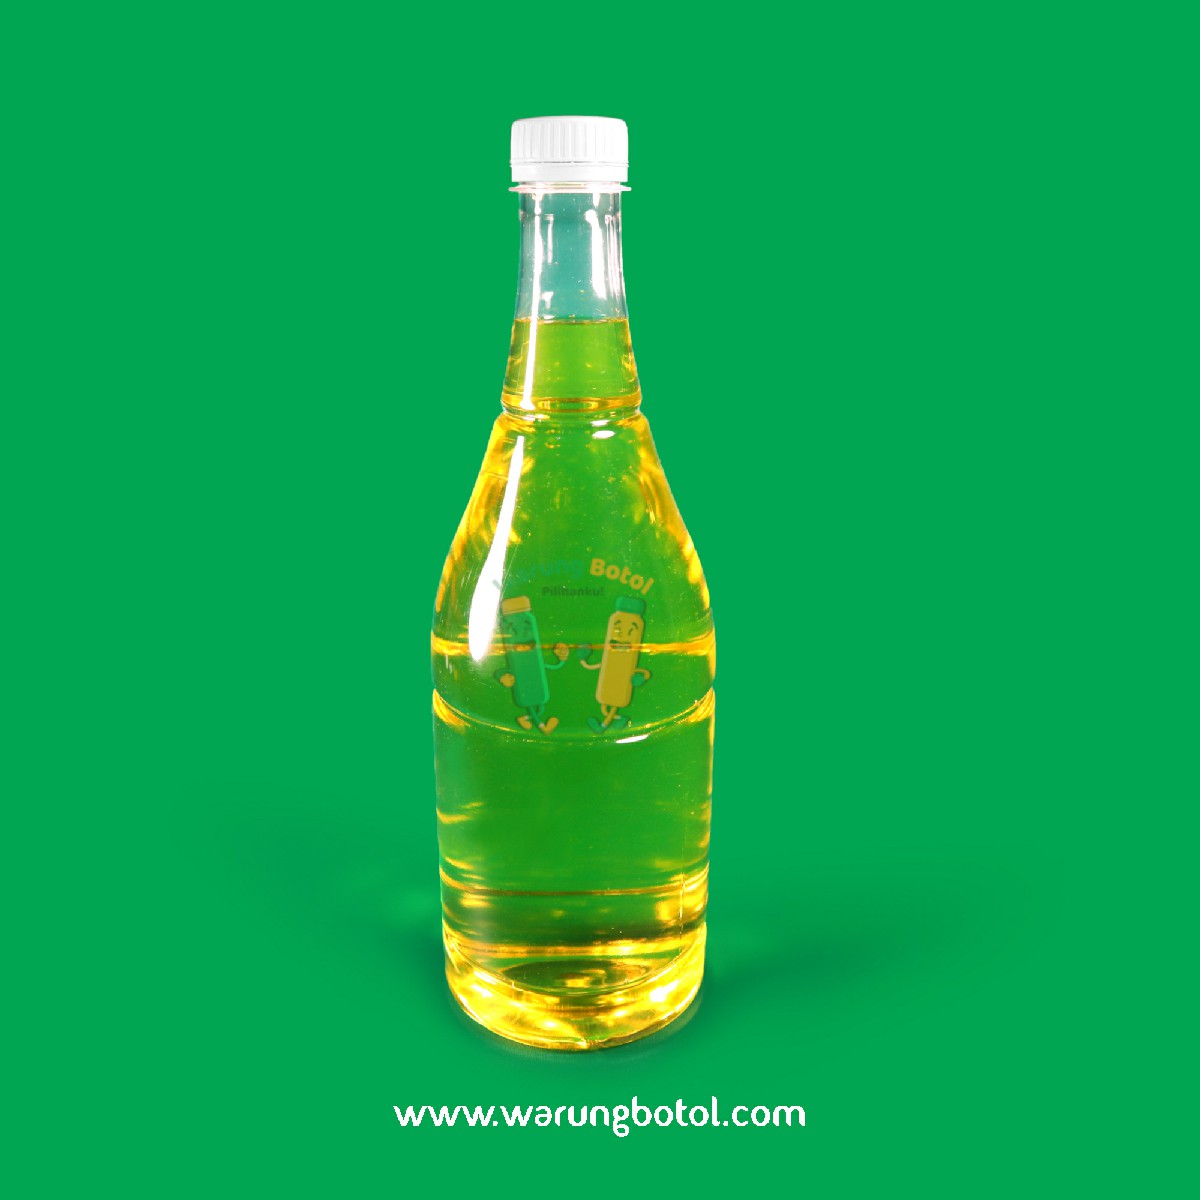 Botol Angsa LN (Long Neck) atau disebut juga sebagai botol plastik 1 litet yaitu botol kemasan plastik untuk produk minuman anda dengan kapasitas besar yaitu 1000ml, botol plastik akali ini biasa digu